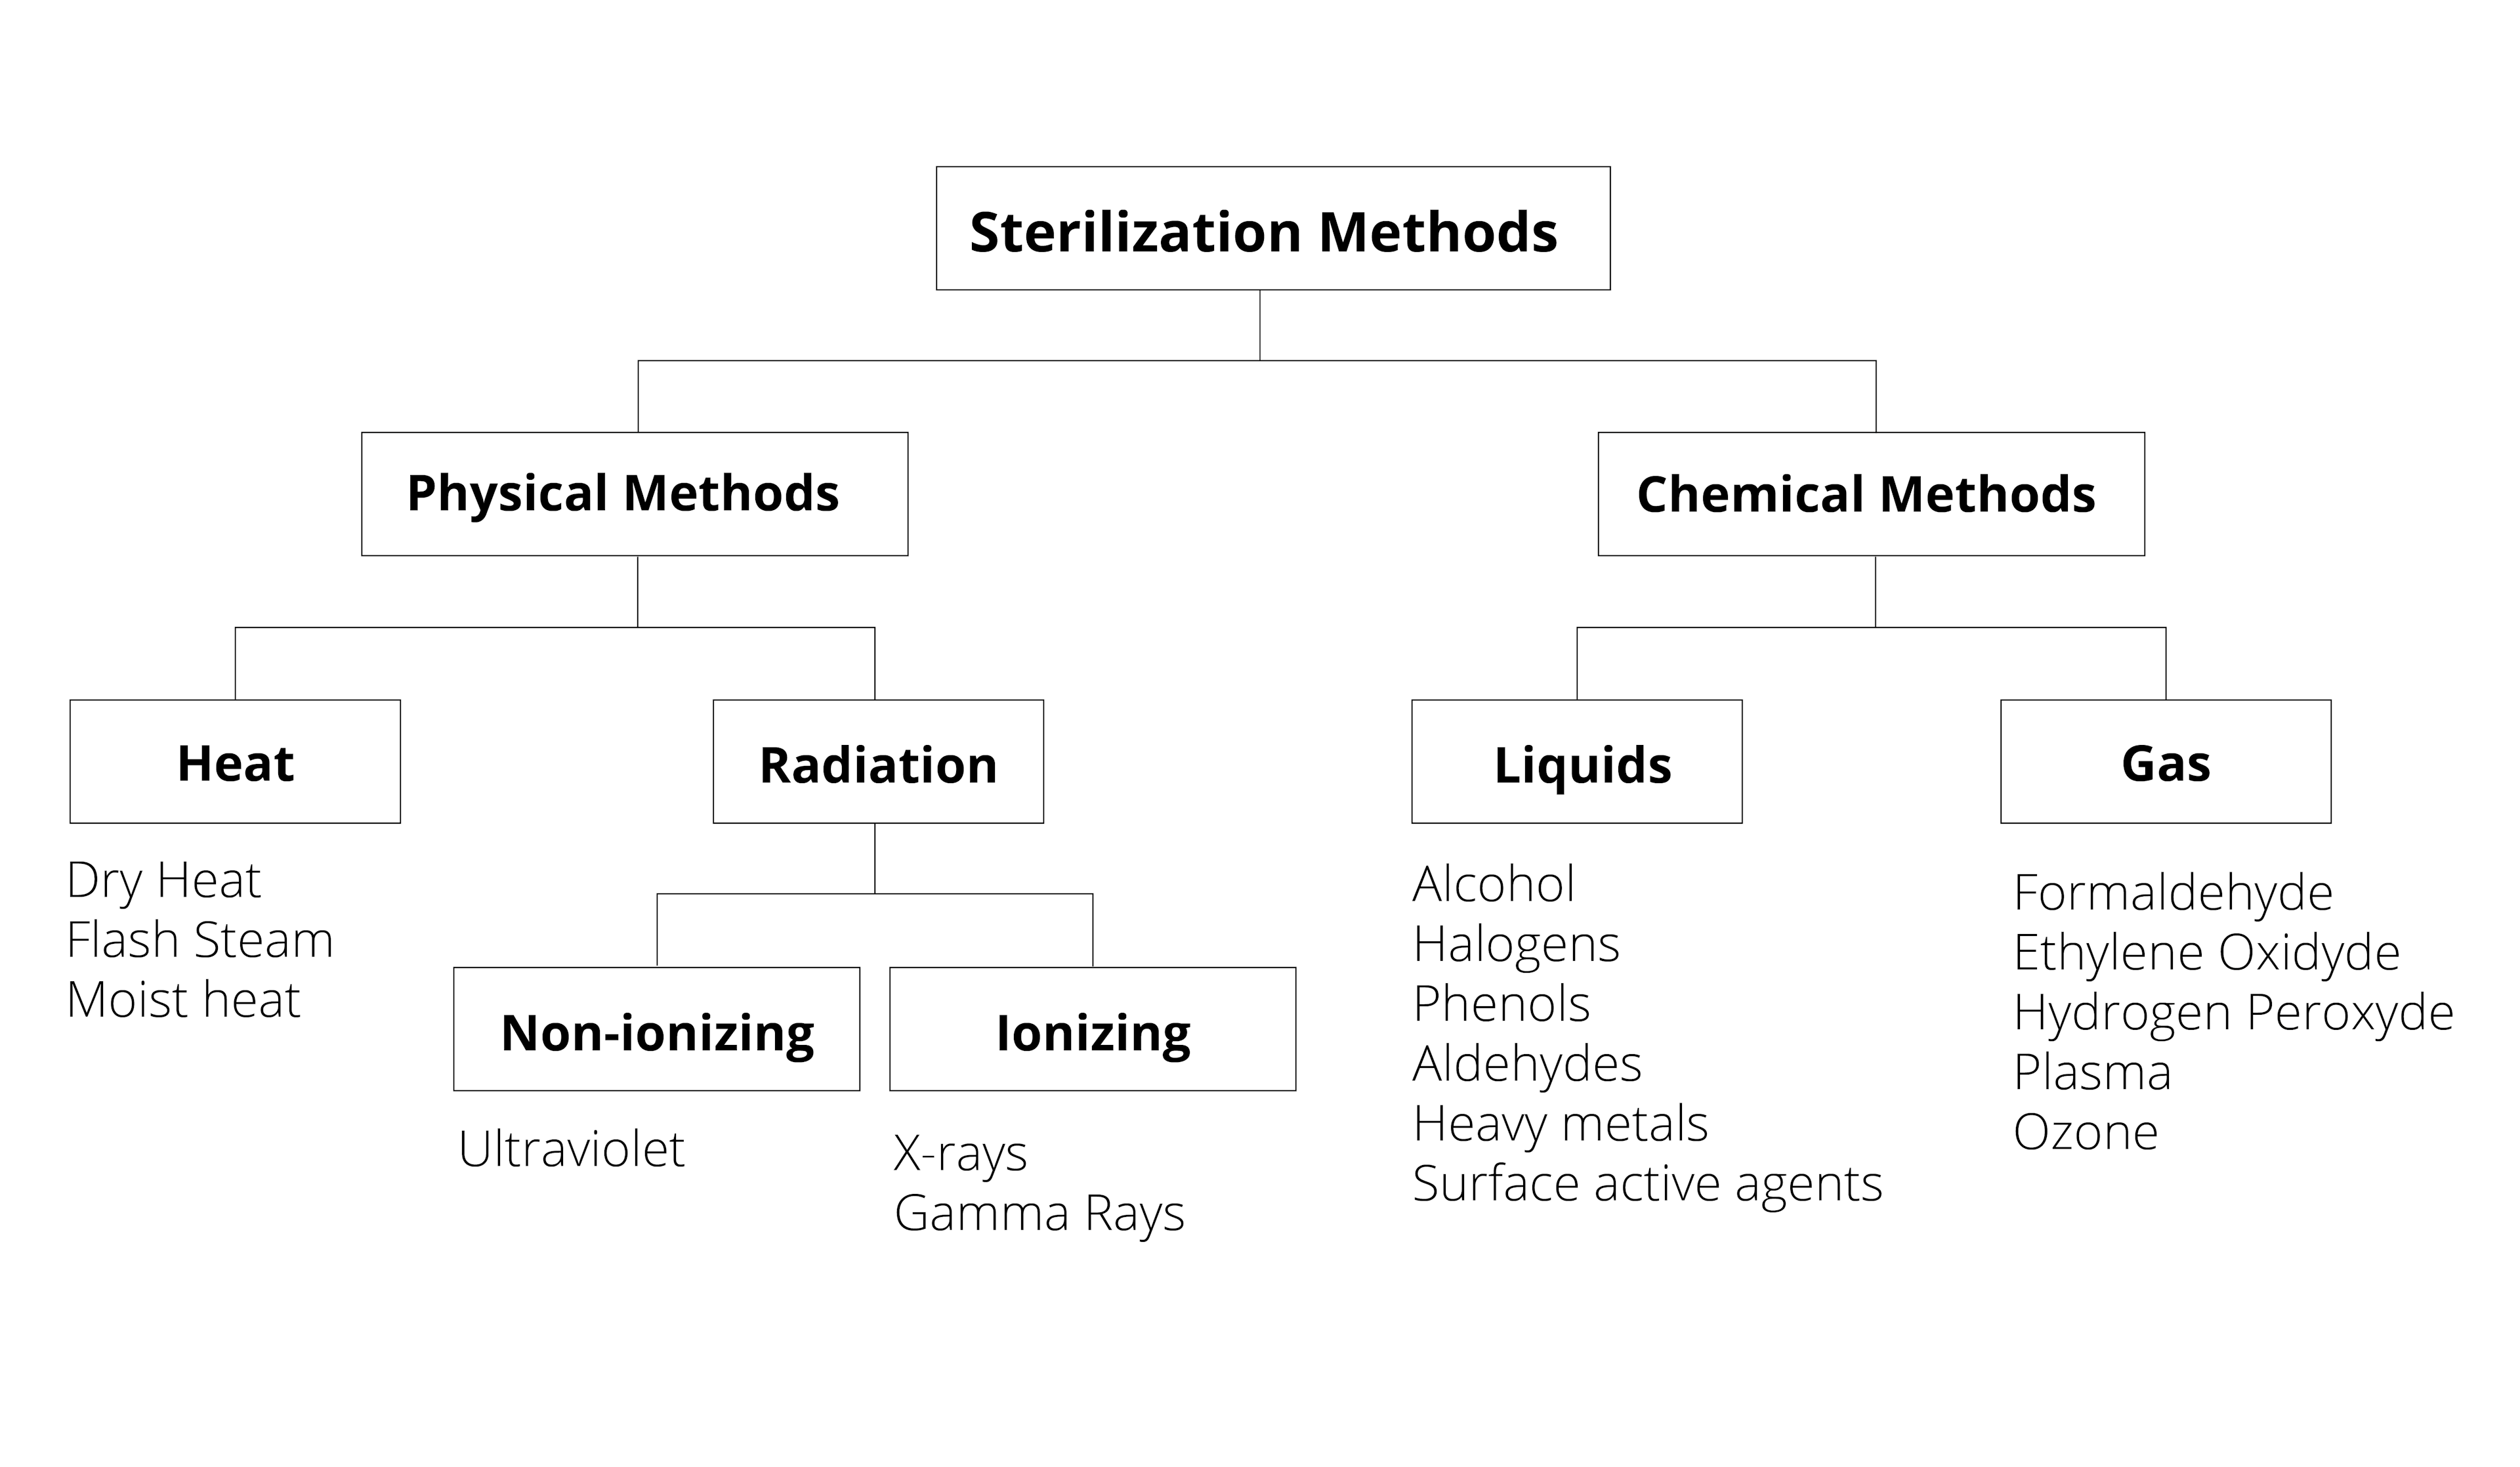 Sterilization methods tree graph